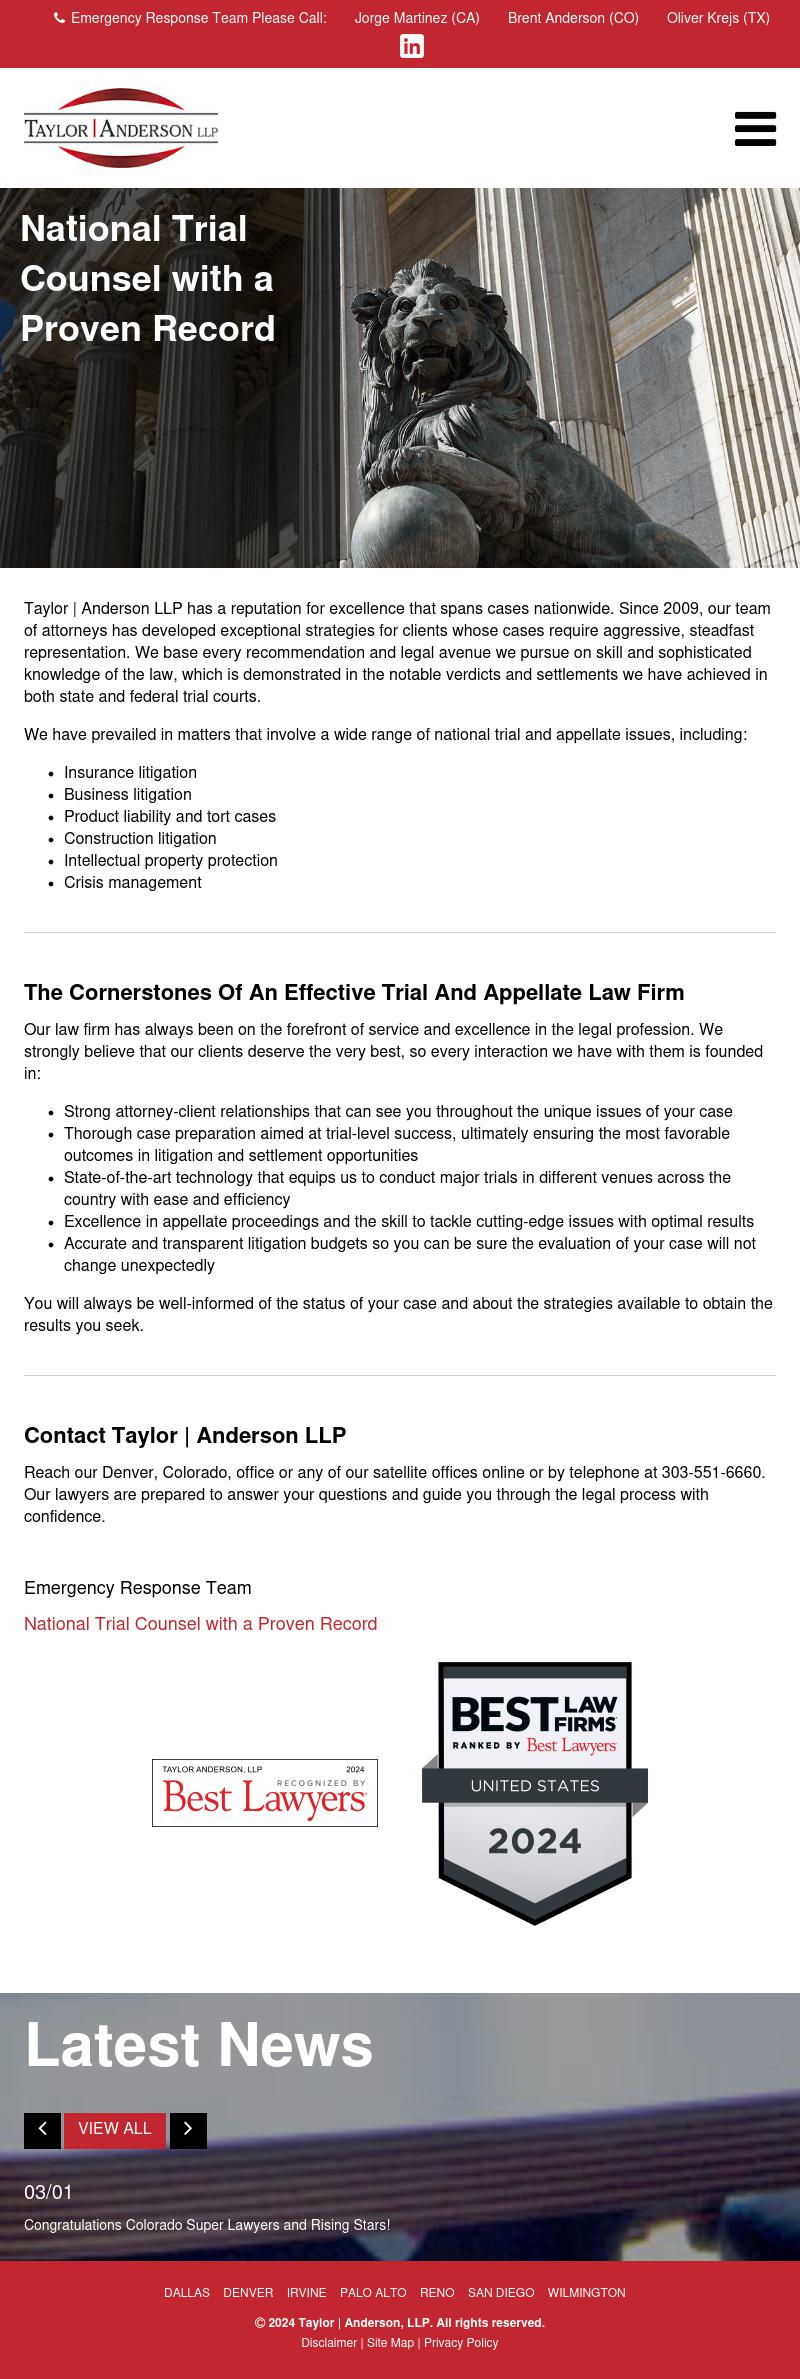 Taylor | Anderson, LLP - Scottsdale AZ Lawyers